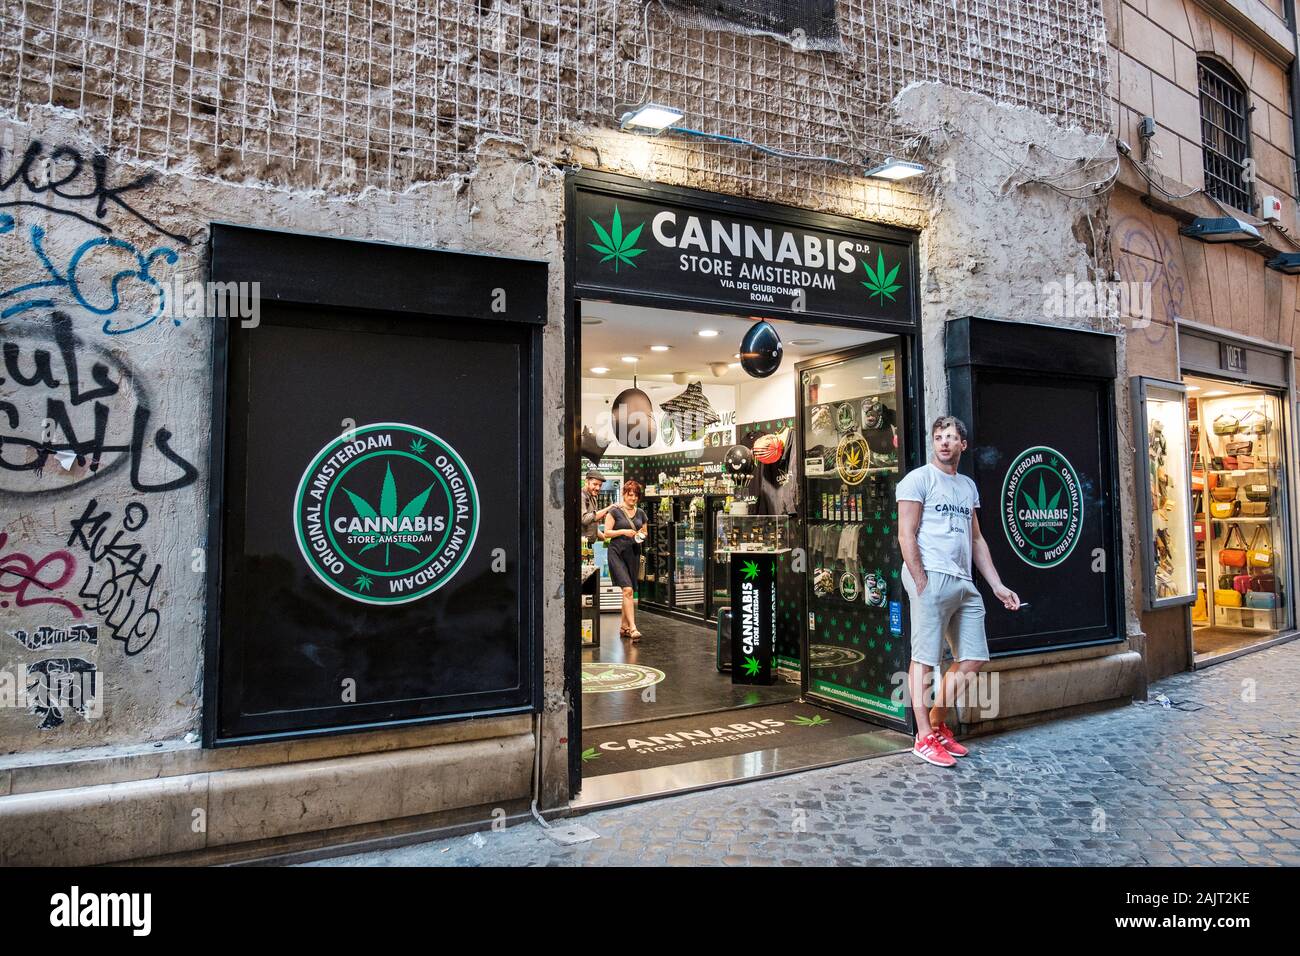 Cannabis Store Amsterdam facade, marijuana retail store at Via dei Giubbonari, Rome, Italy Stock Photo